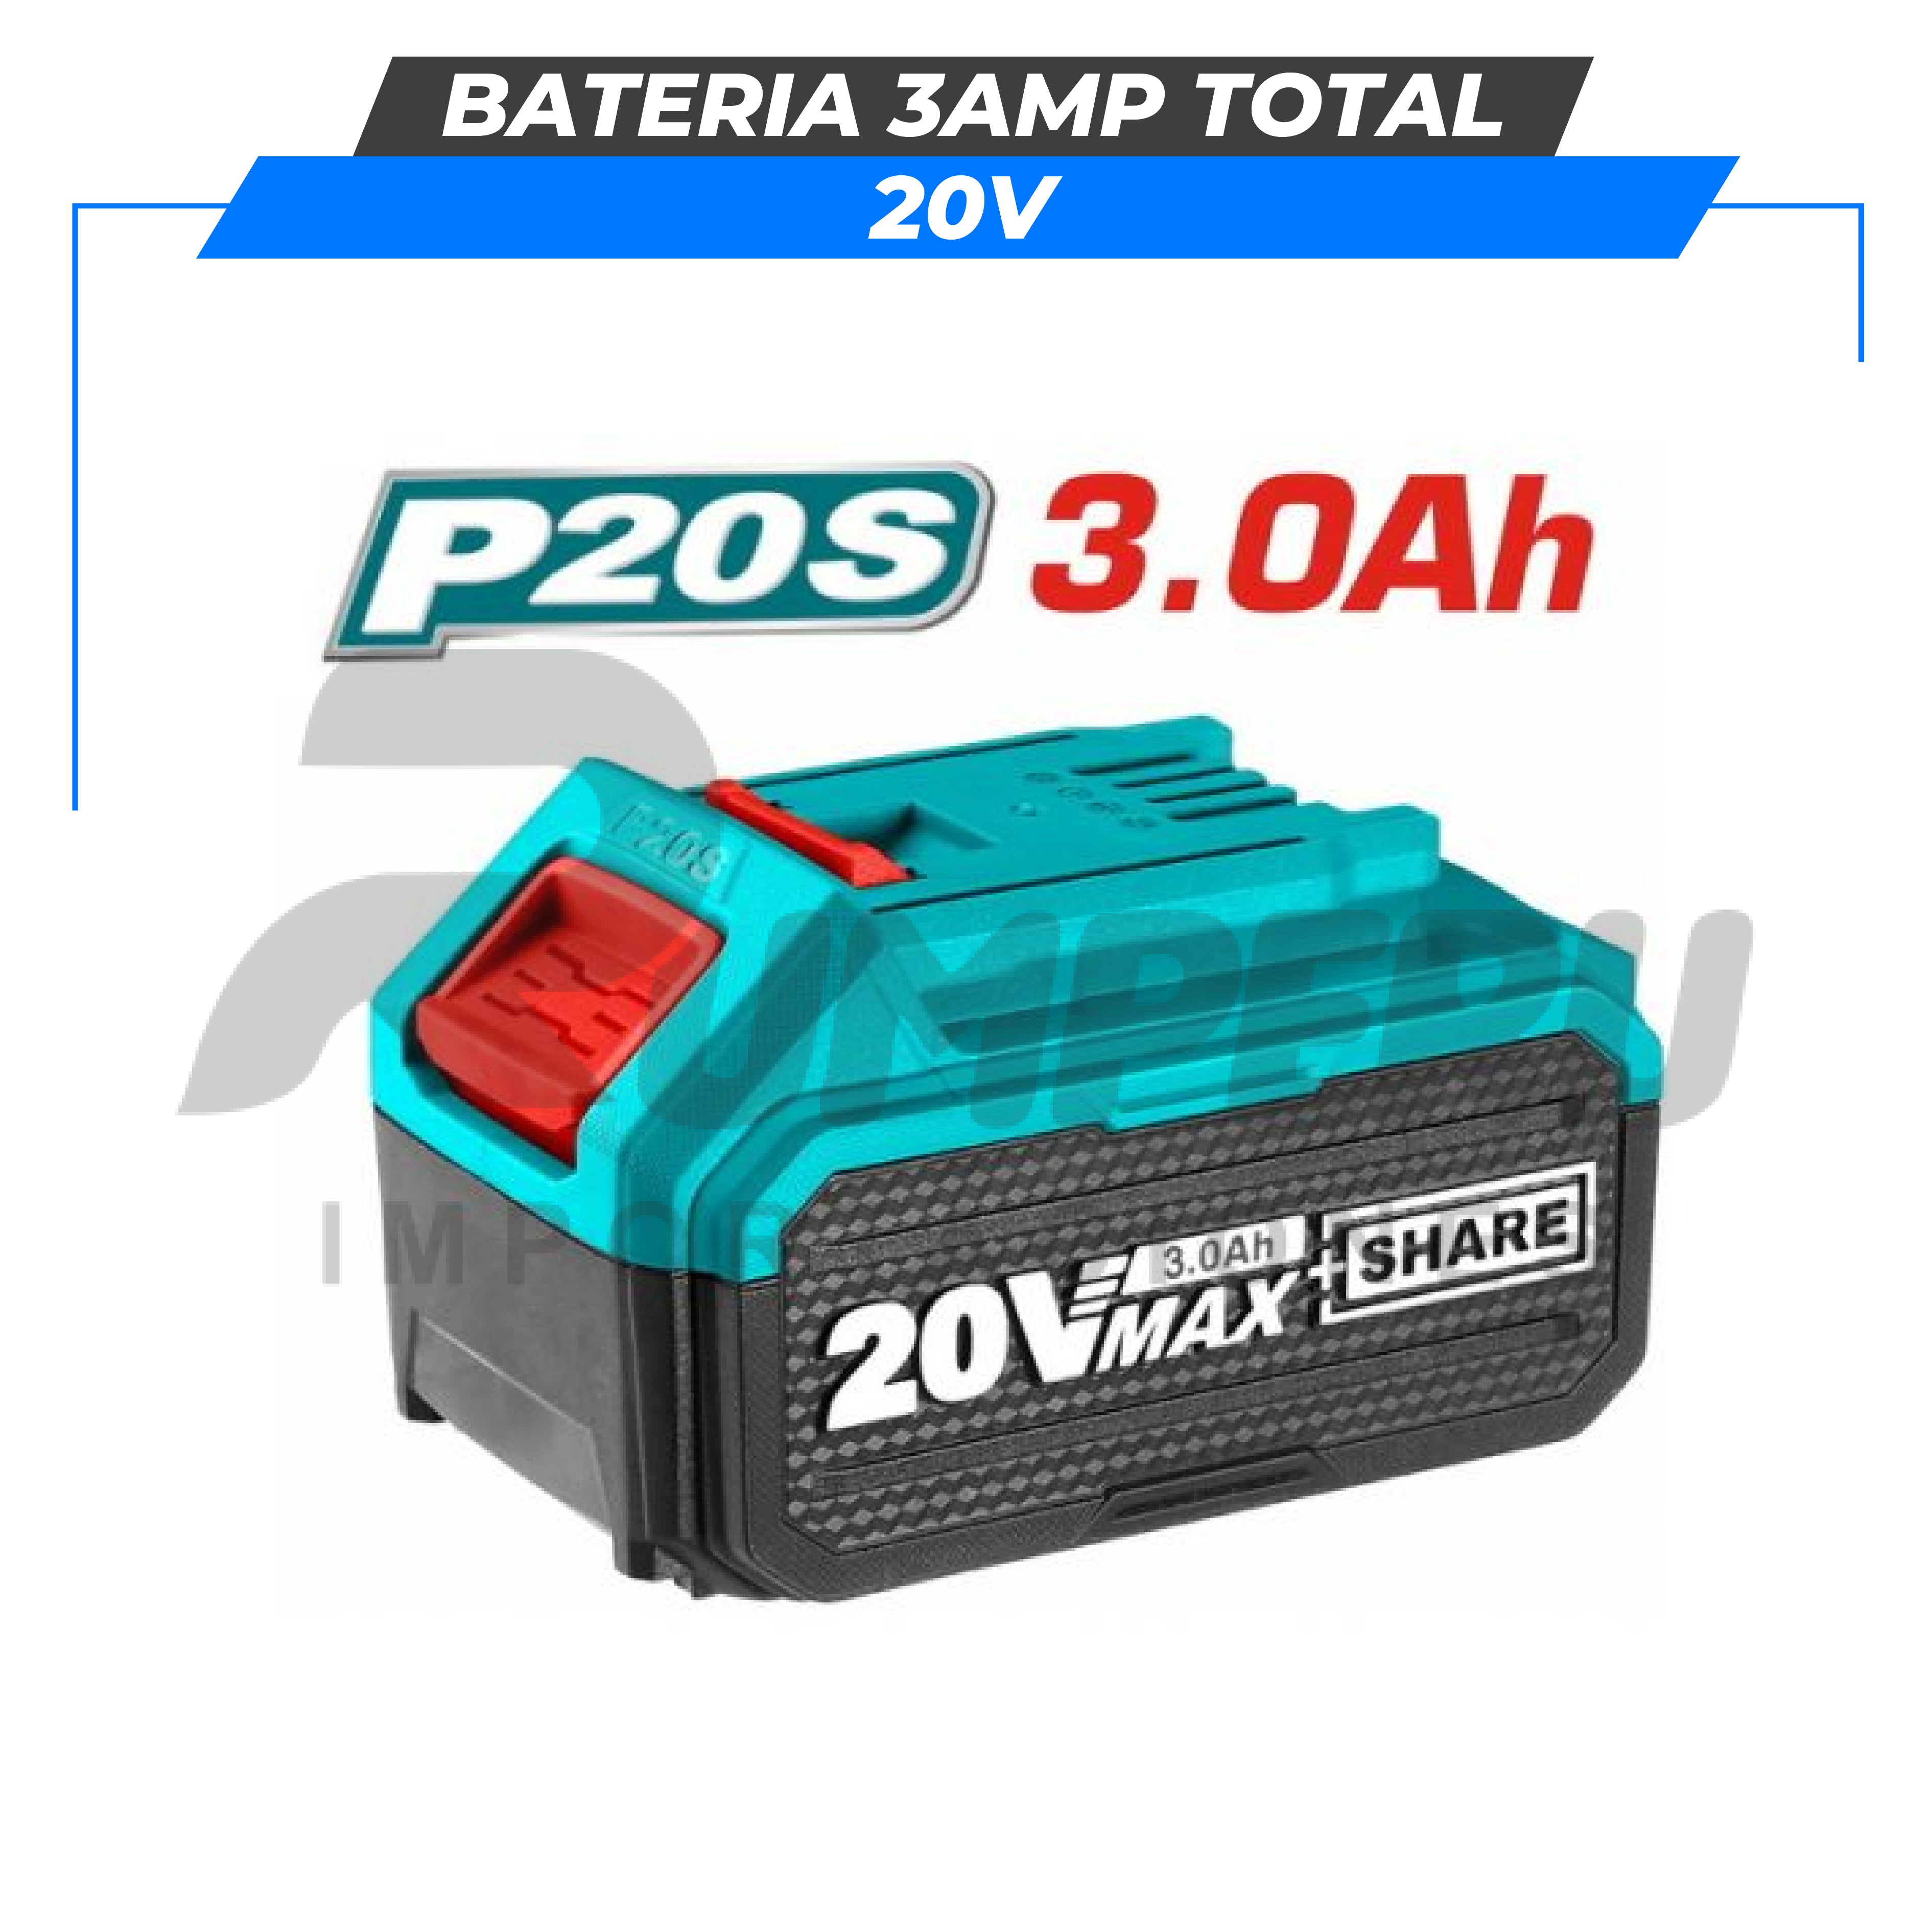 Bateria 20v 3 amp TOTAL